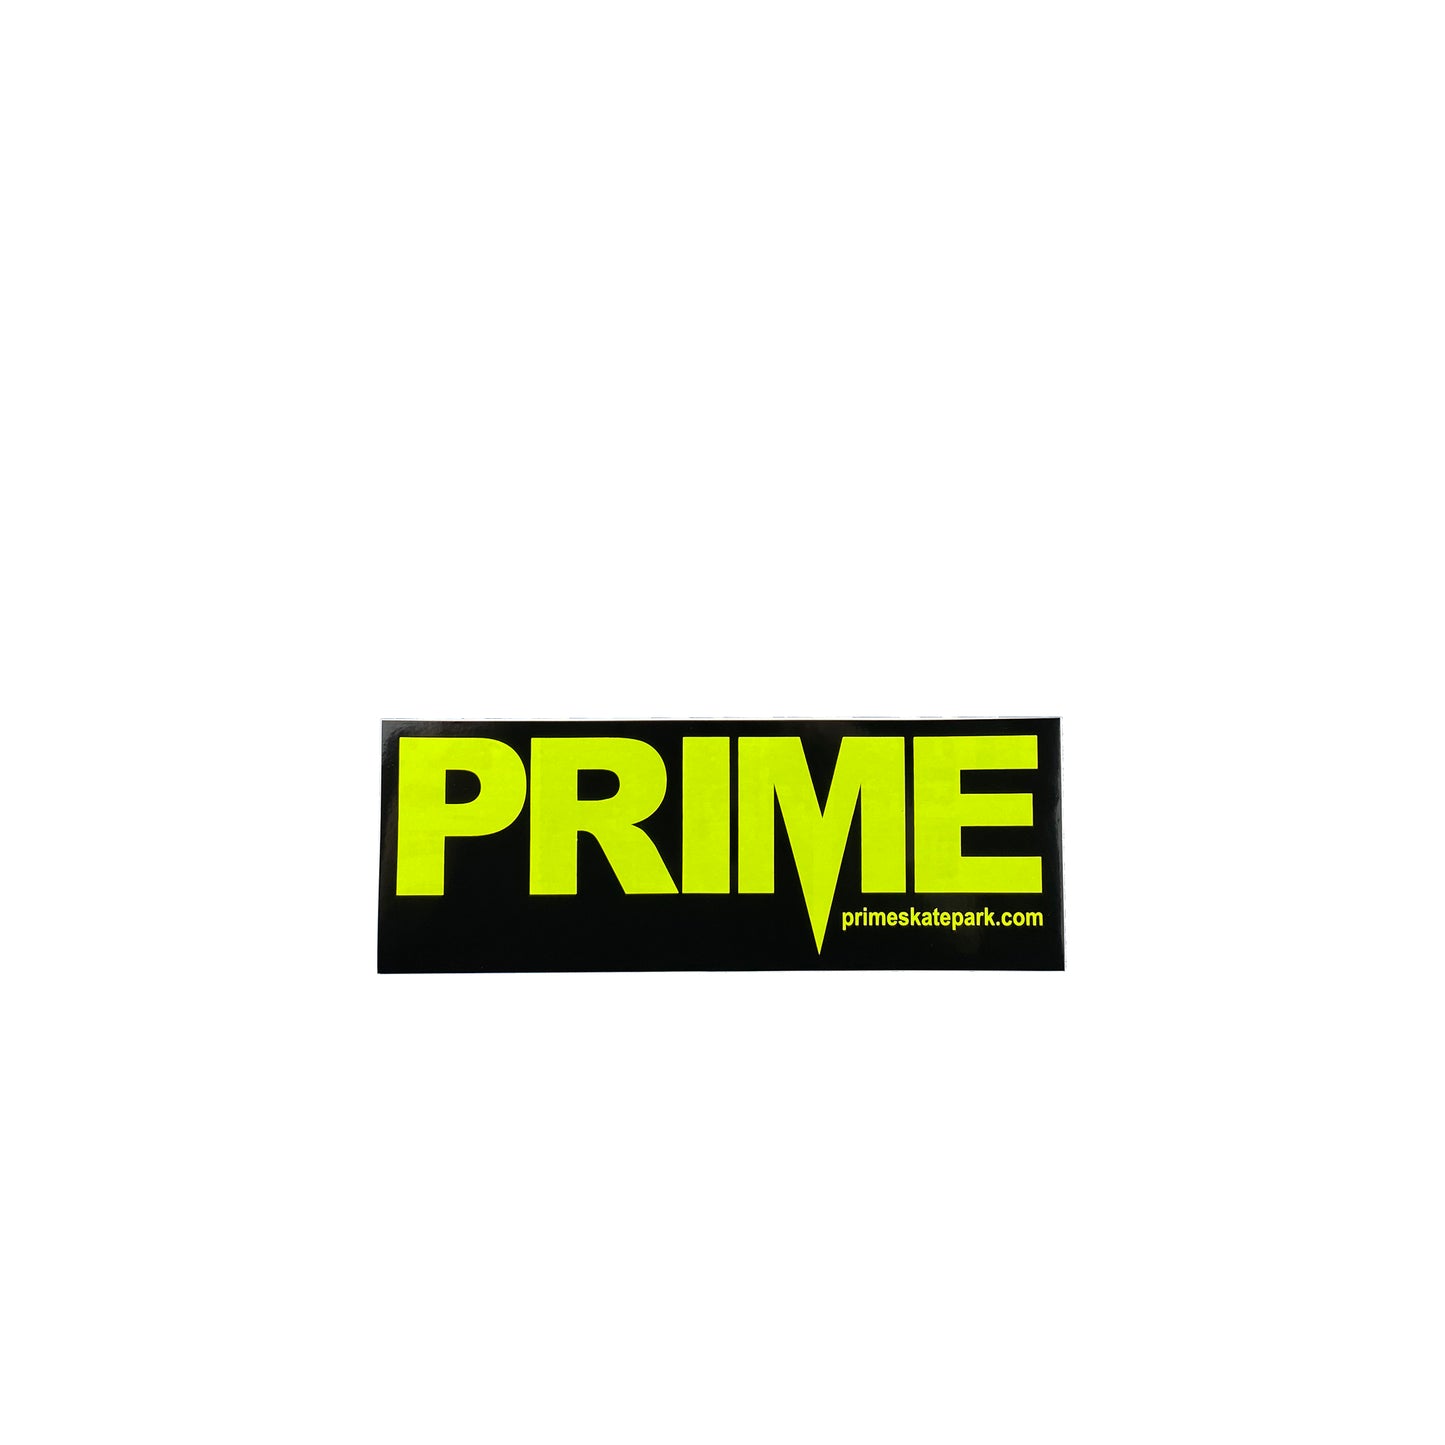 Prime Delux OG SP Sticker M - Black / Neon Yellow - Prime Delux Store